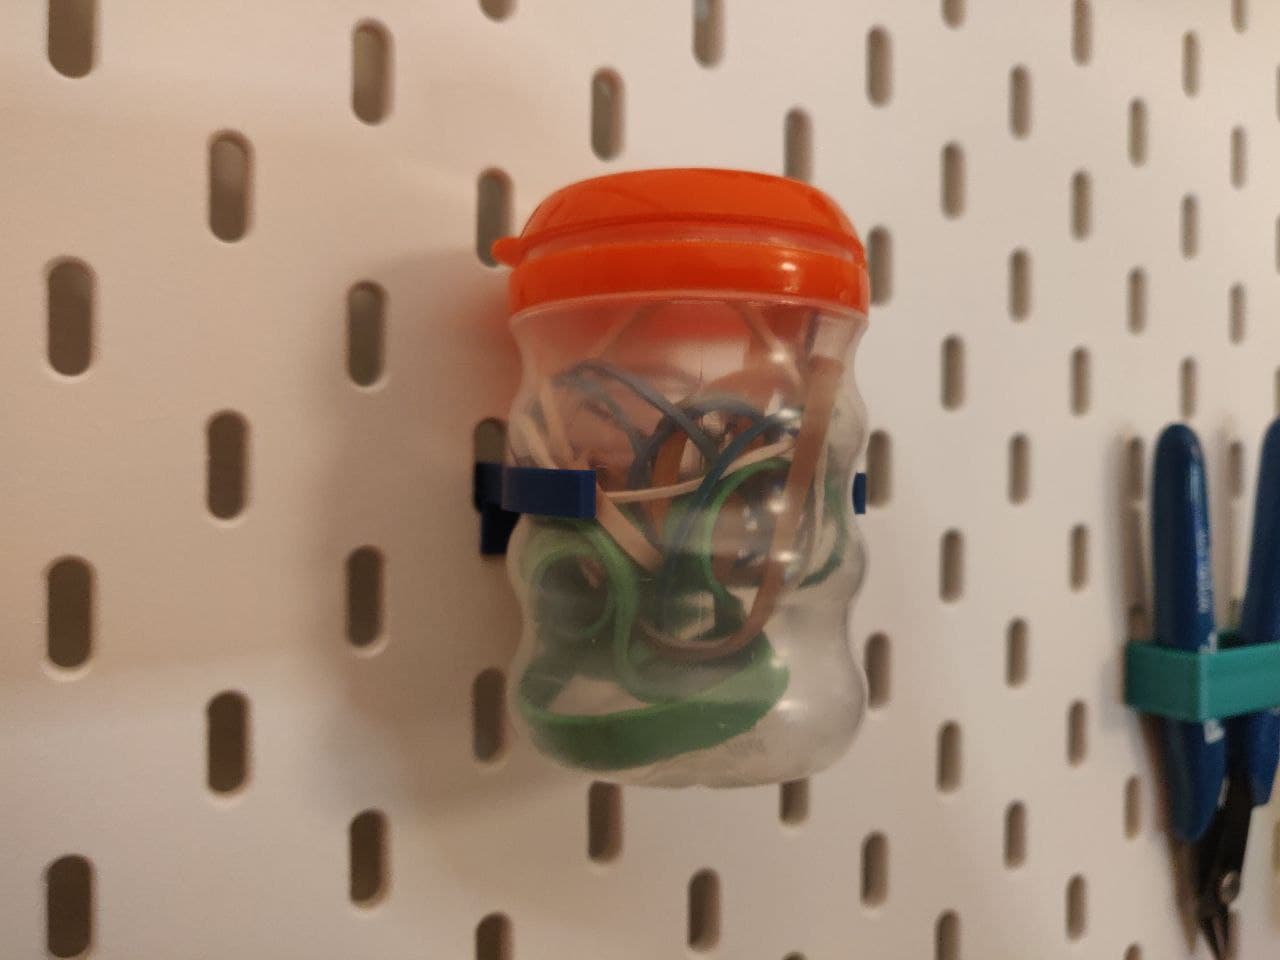 Mentos chewing gum case holder (IKEA Skadis)